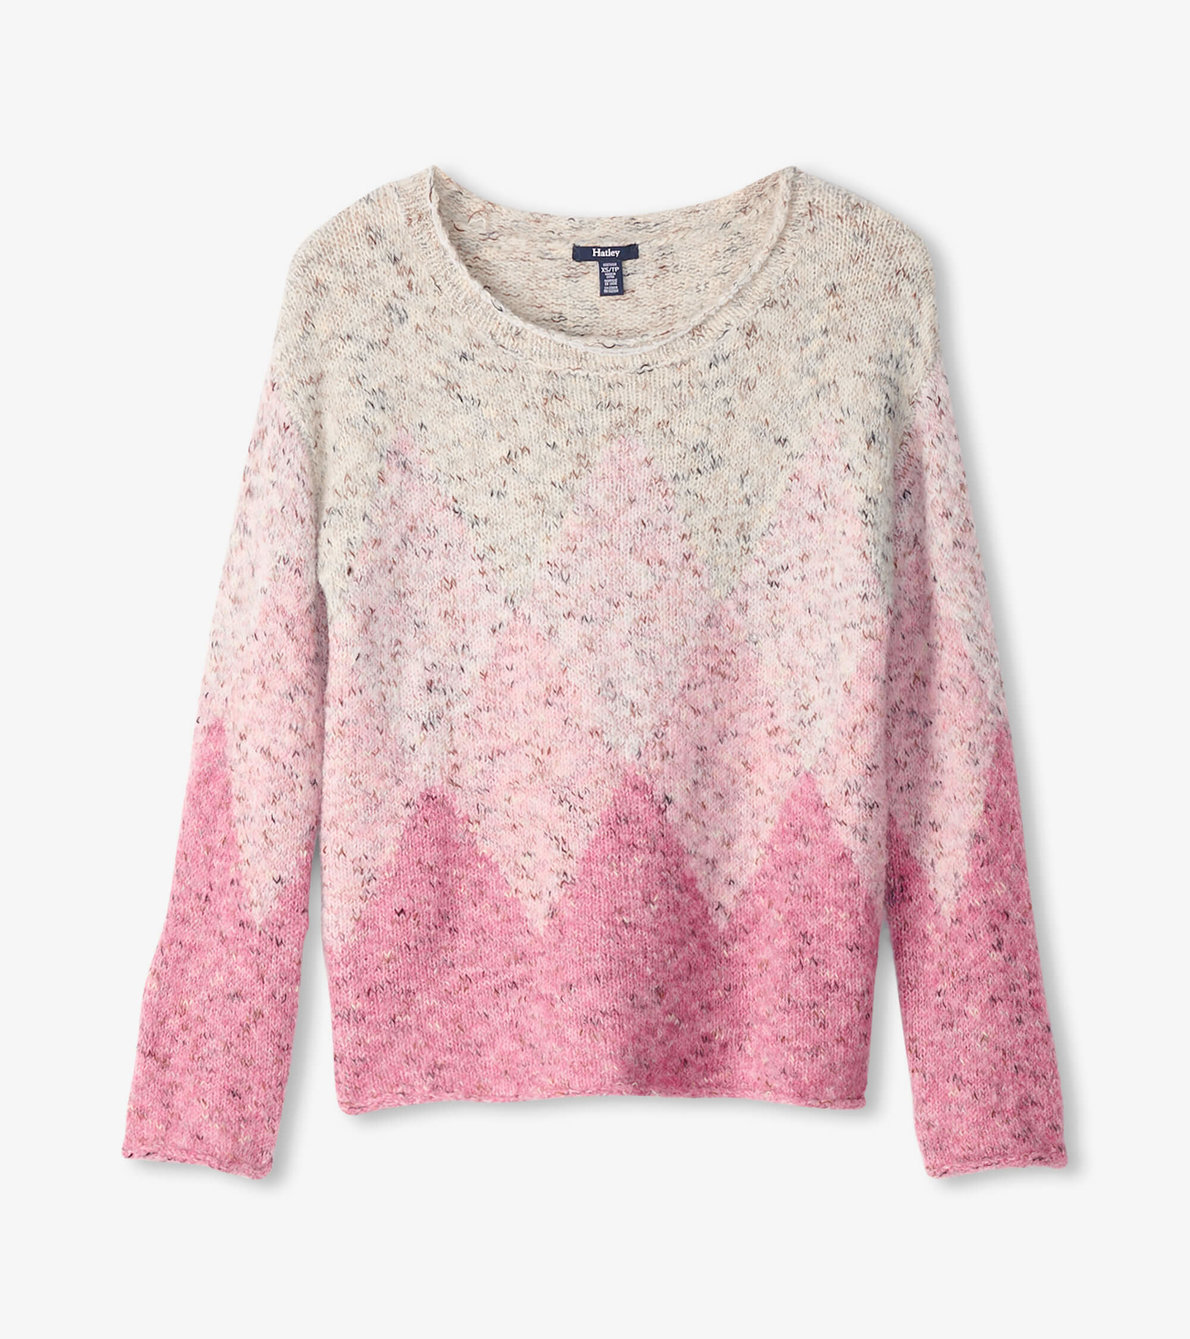 View larger image of Drop Shoulder Sweater - Rose Argyle -